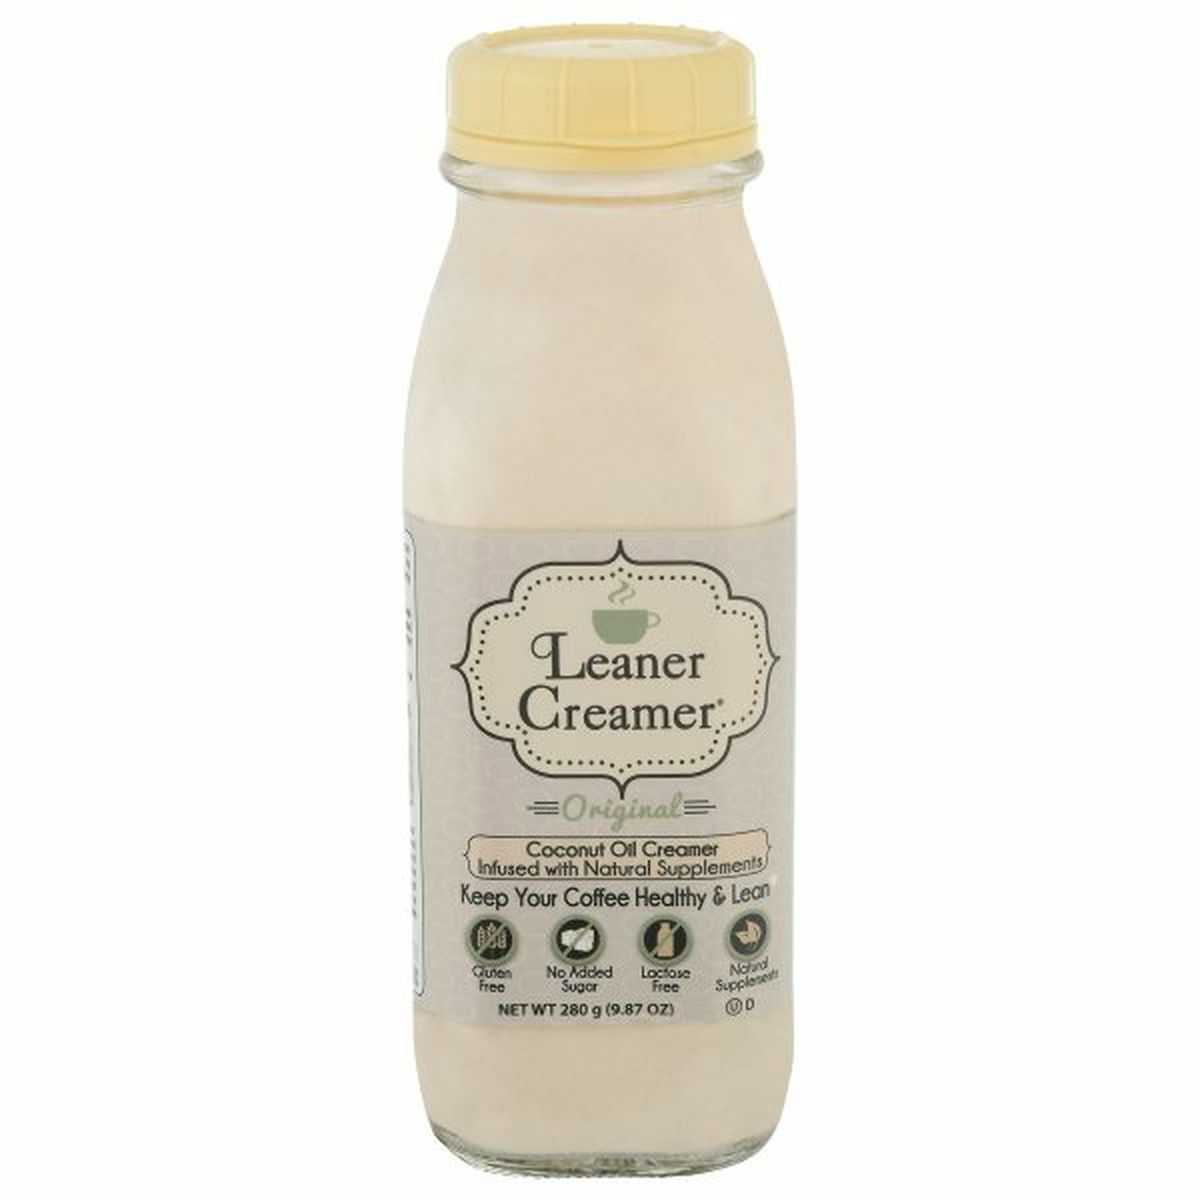 Calories in Leaner Creamer Coconut Oil Creamer, Original